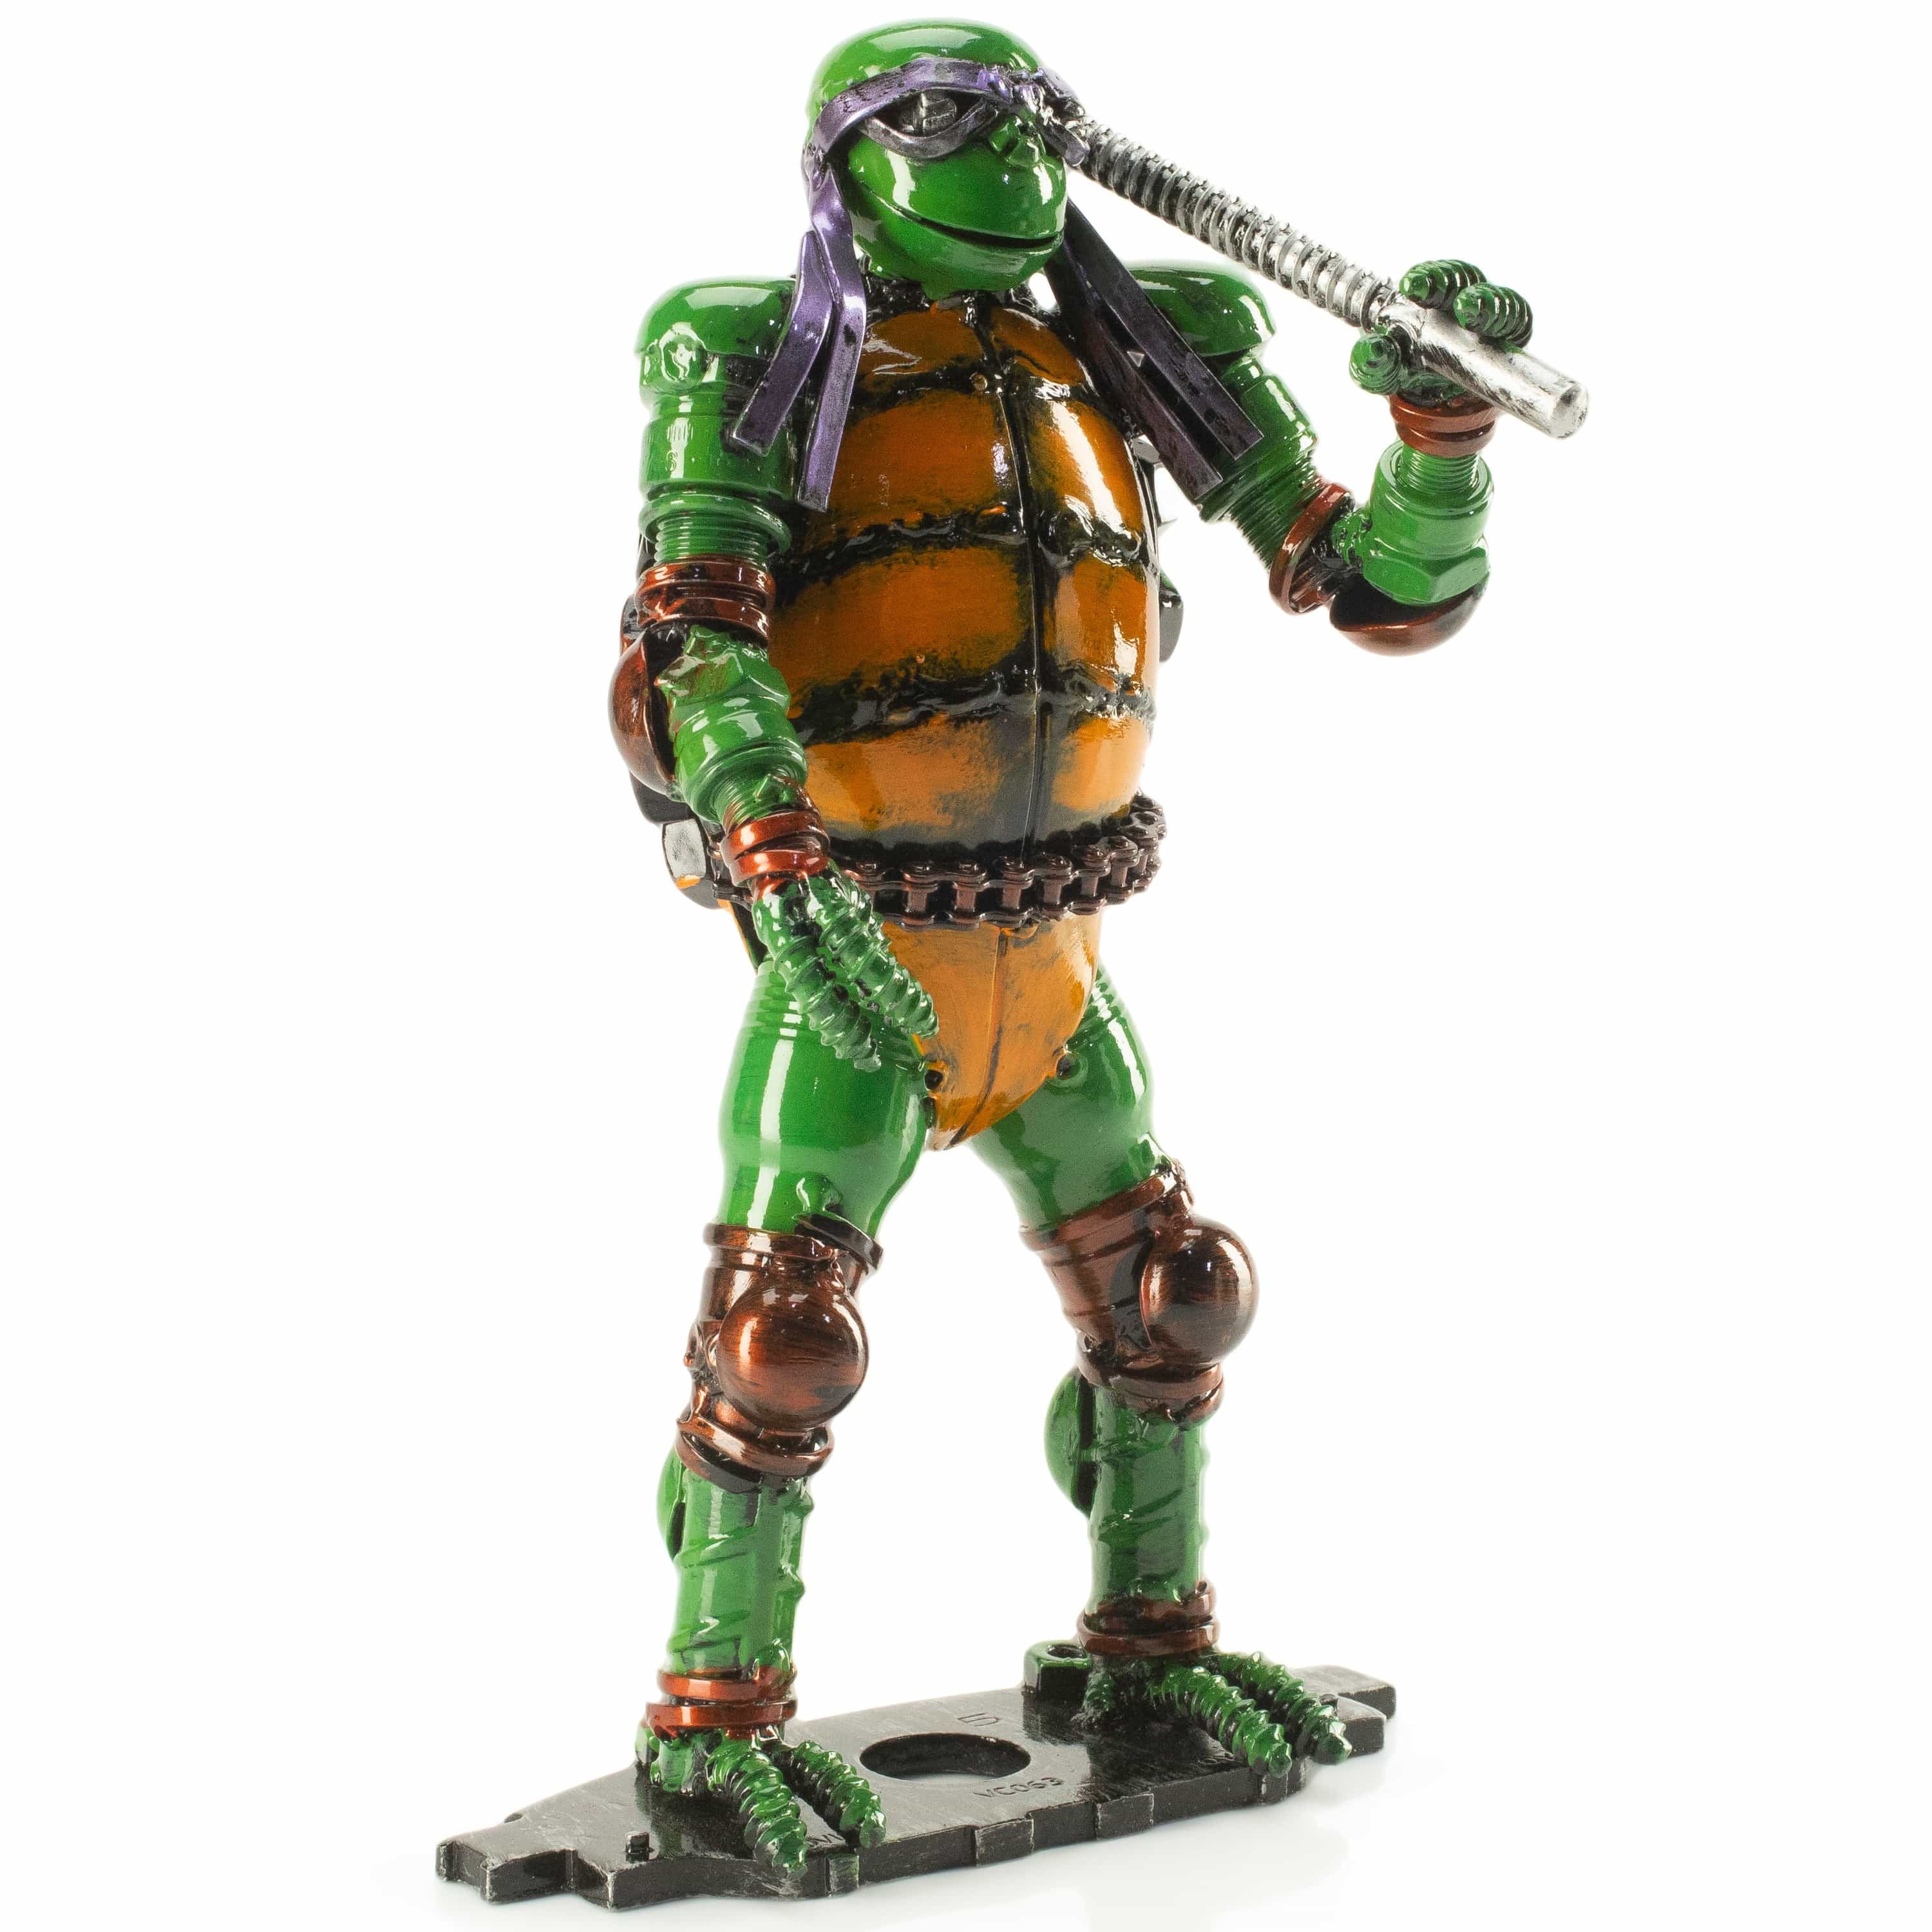 Kalifano Recycled Metal Art Donatello Ninja Turtle Inspired Recycled Metal Sculpture RMS-600NTD-N